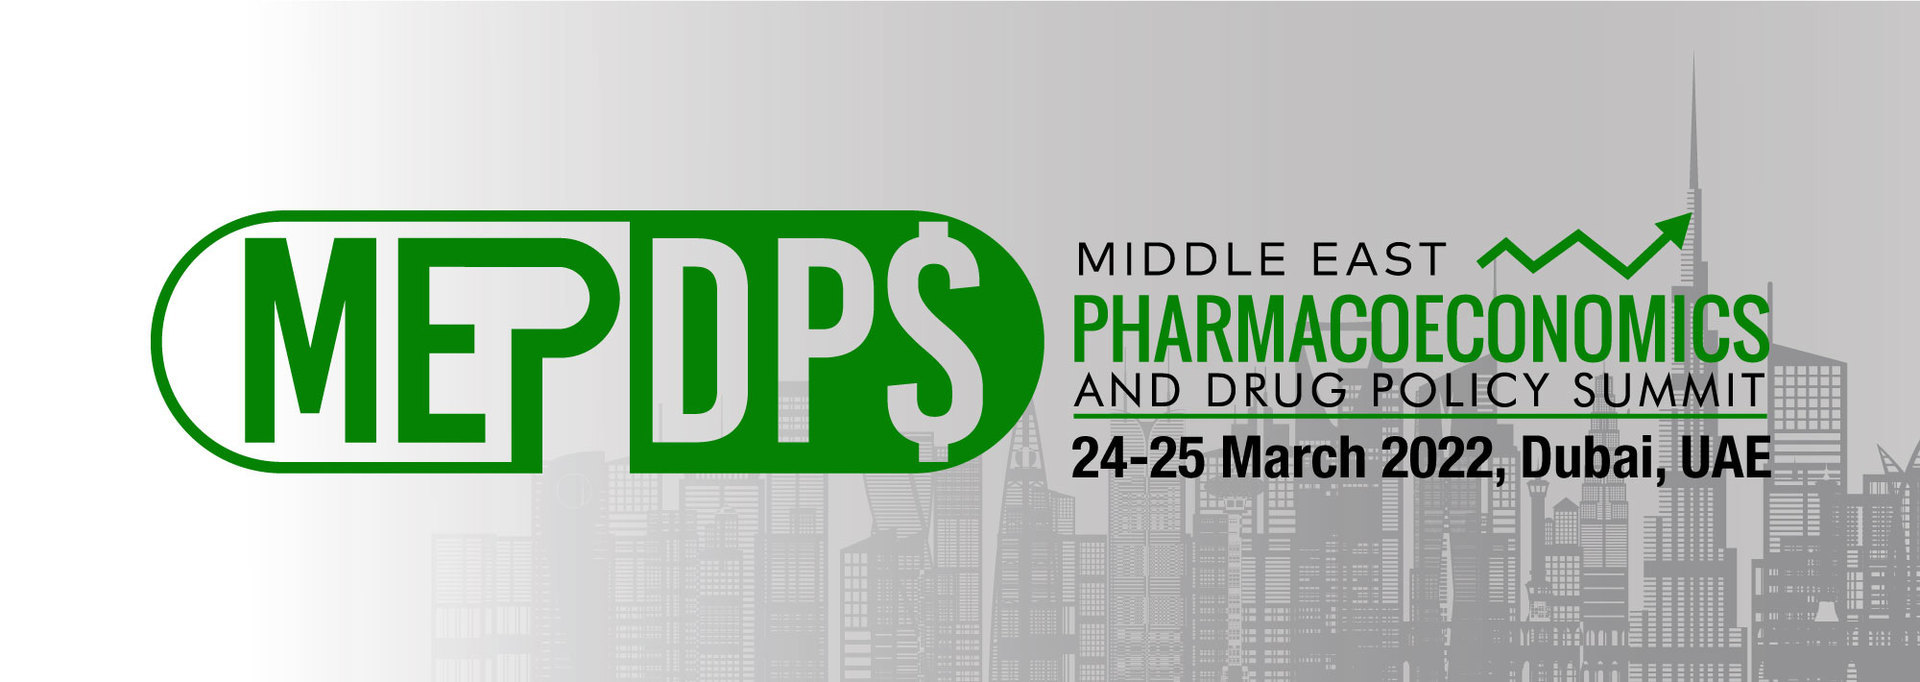 Middle East Pharmacoeconomics and Drug Policy Summit, Dubai, United Arab Emirates